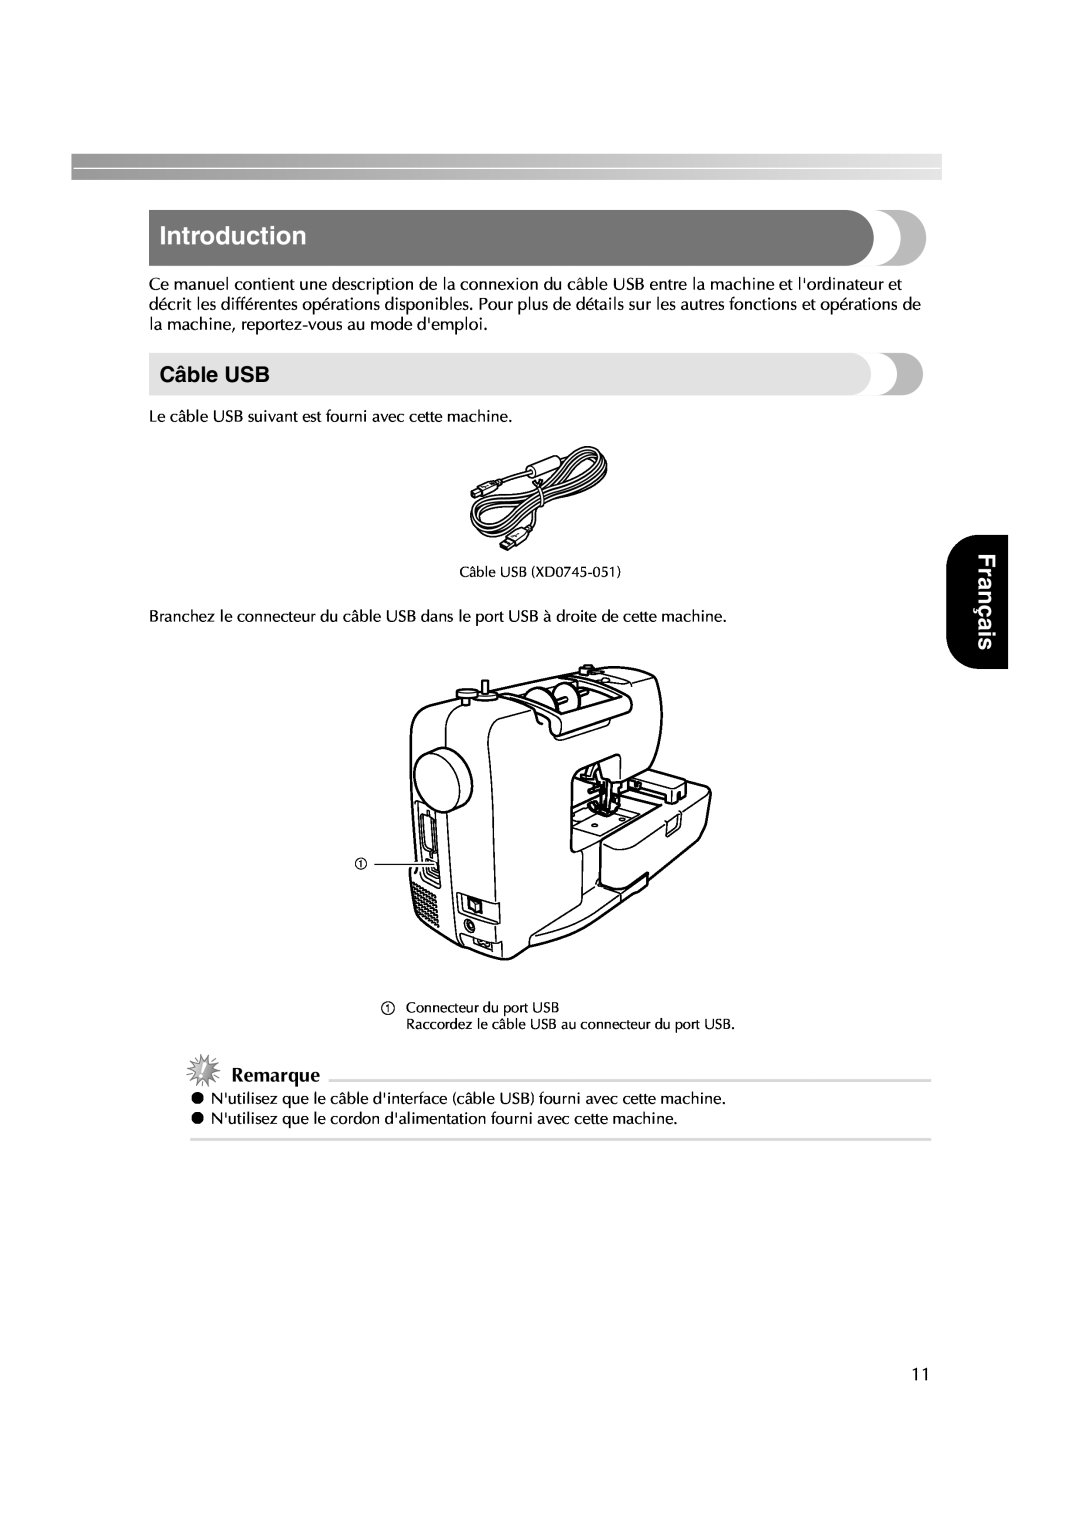 Brother HE-240 instruction manual Français, Câble USB, Remarque, Introduction 